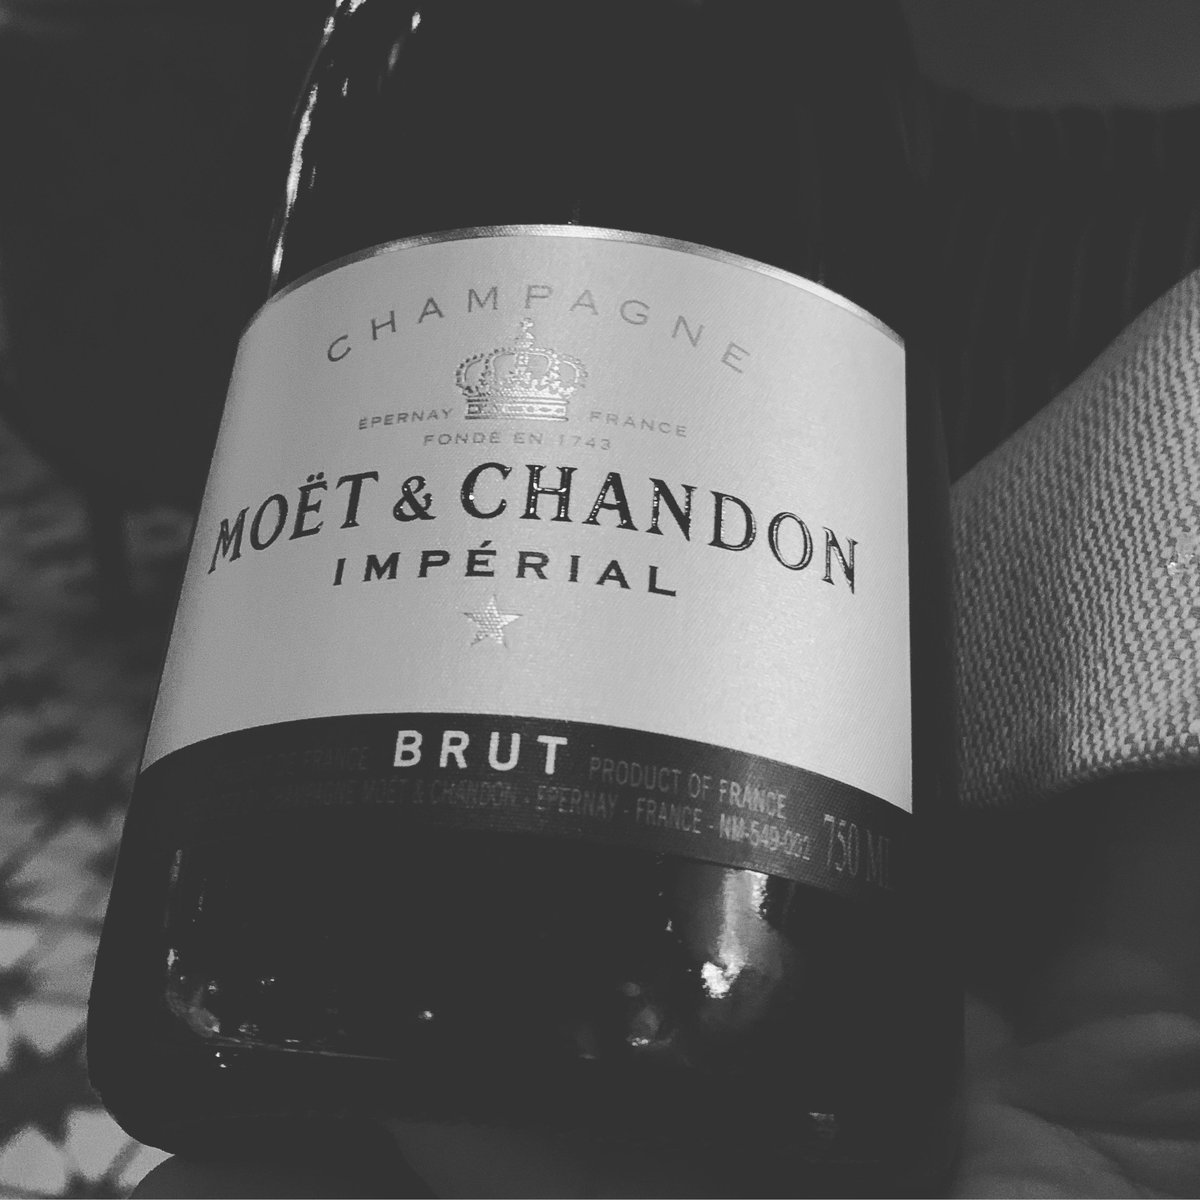 Drinking #champagne Nicely tonight.. #BubblesandBites  @eatblueribbon  #eatblueribbon #blueribbonbrasserie  @Cosmopolitan_LV  #cosmopolitanlv with  @moet  #moetchandon #lasvegas #visitlasvegas #travelchannel #cuisineistconfidential #cuisineist #happynewyear2019 #thedailymeal